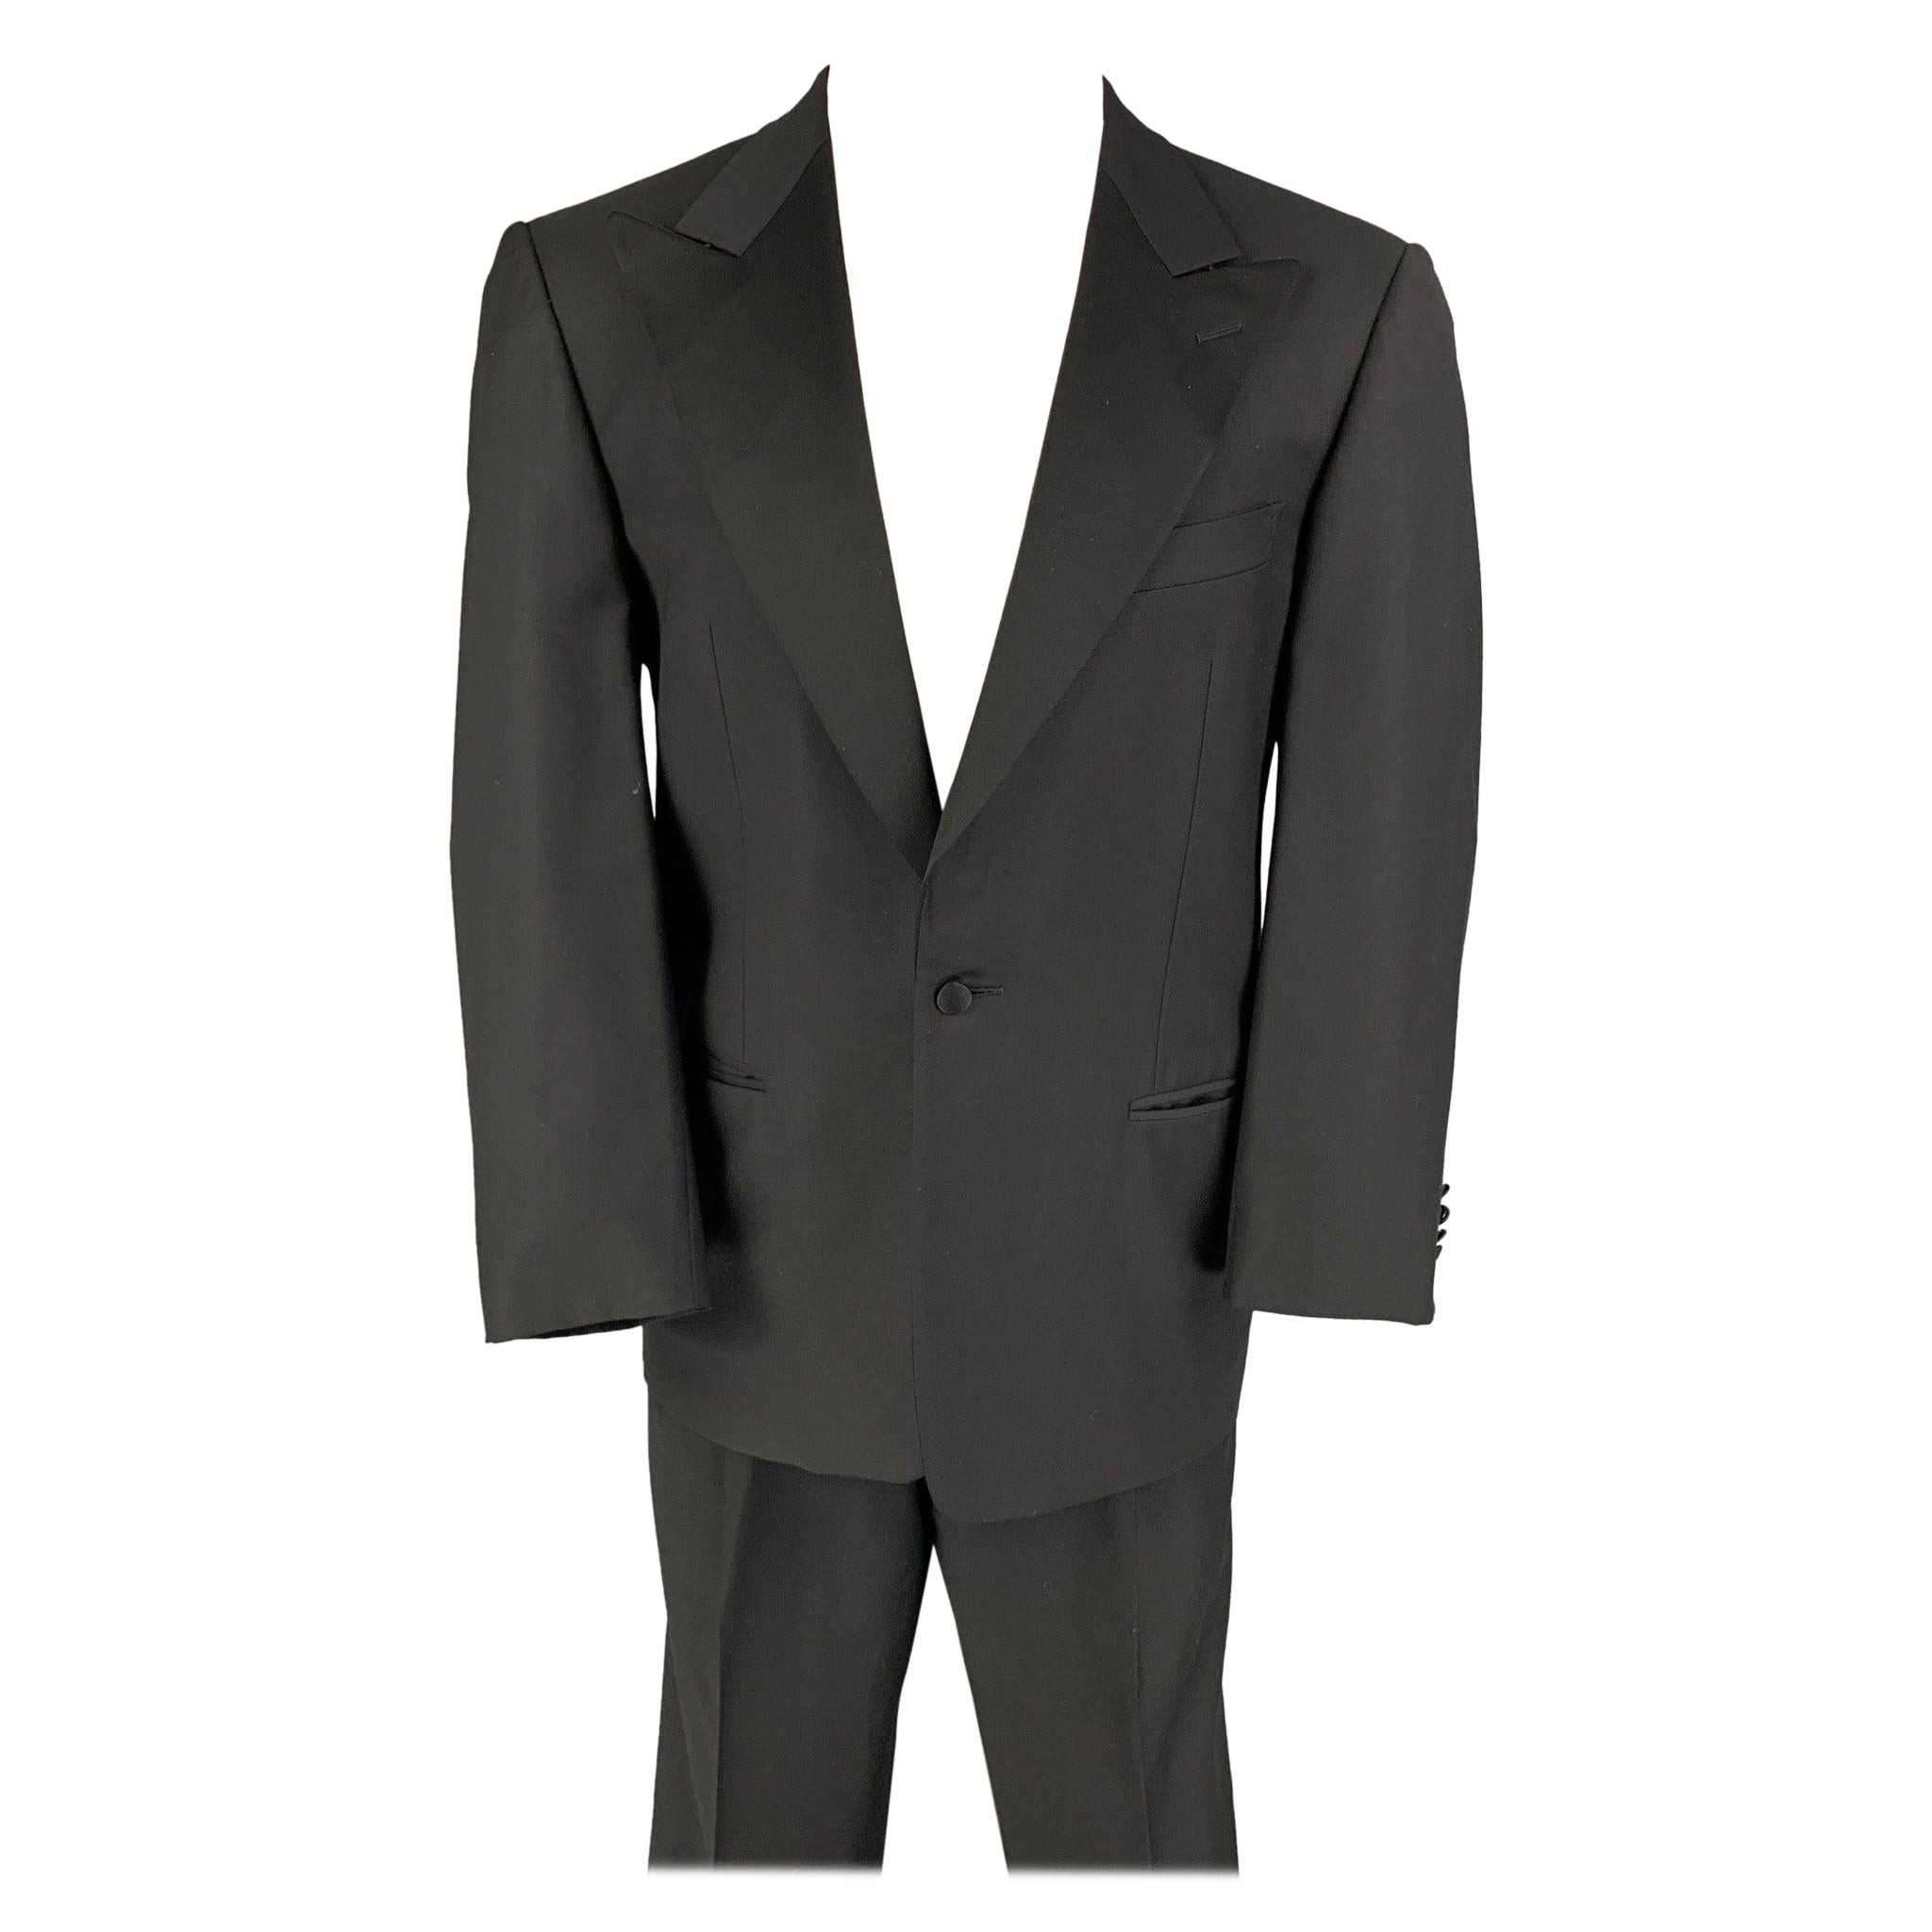 ERMENEGILDO ZEGNA for Neiman Marcus Size 38 Black Wool Suit For Sale